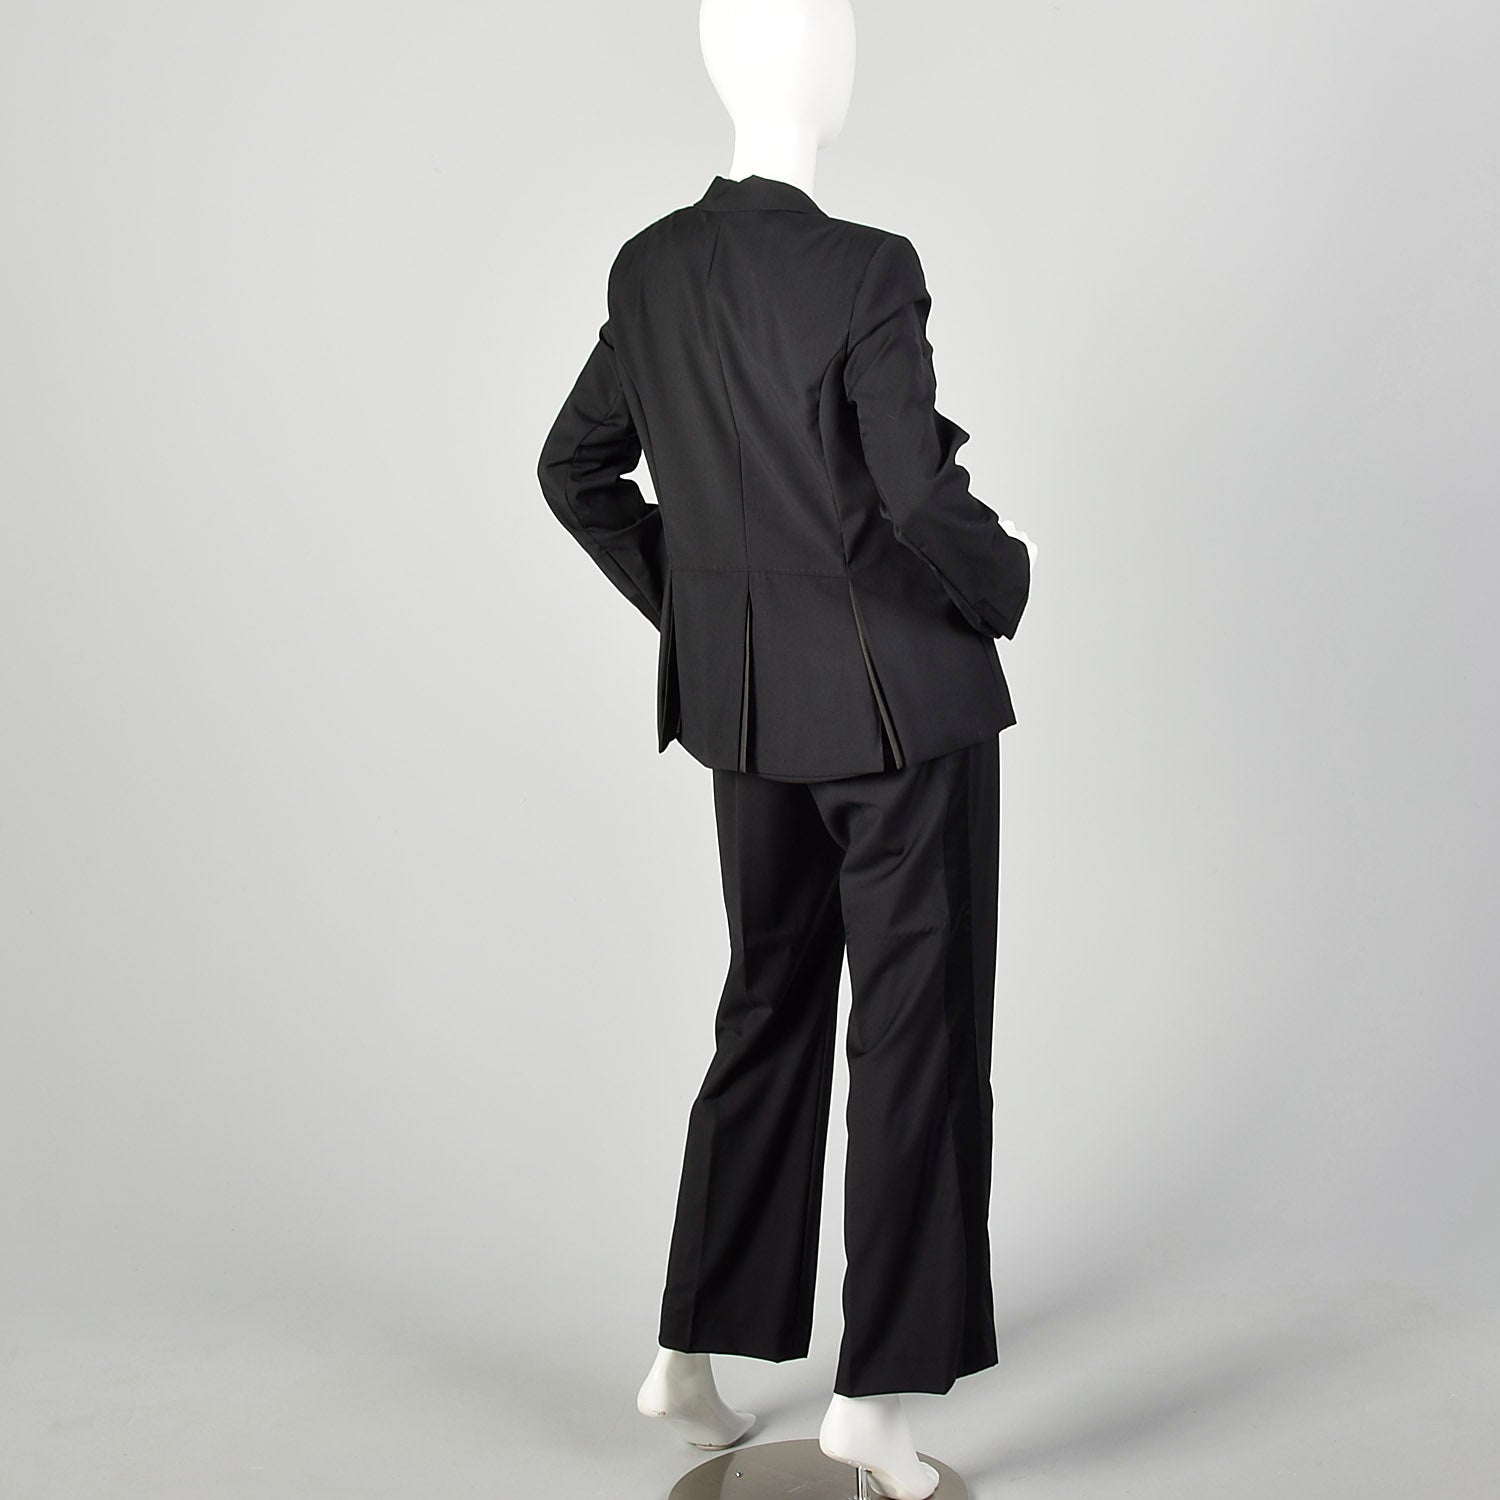 Medium 2000s Strenesse Tuxedo Hollywood Waist Trousers Black Satin Stripe Formal Suit